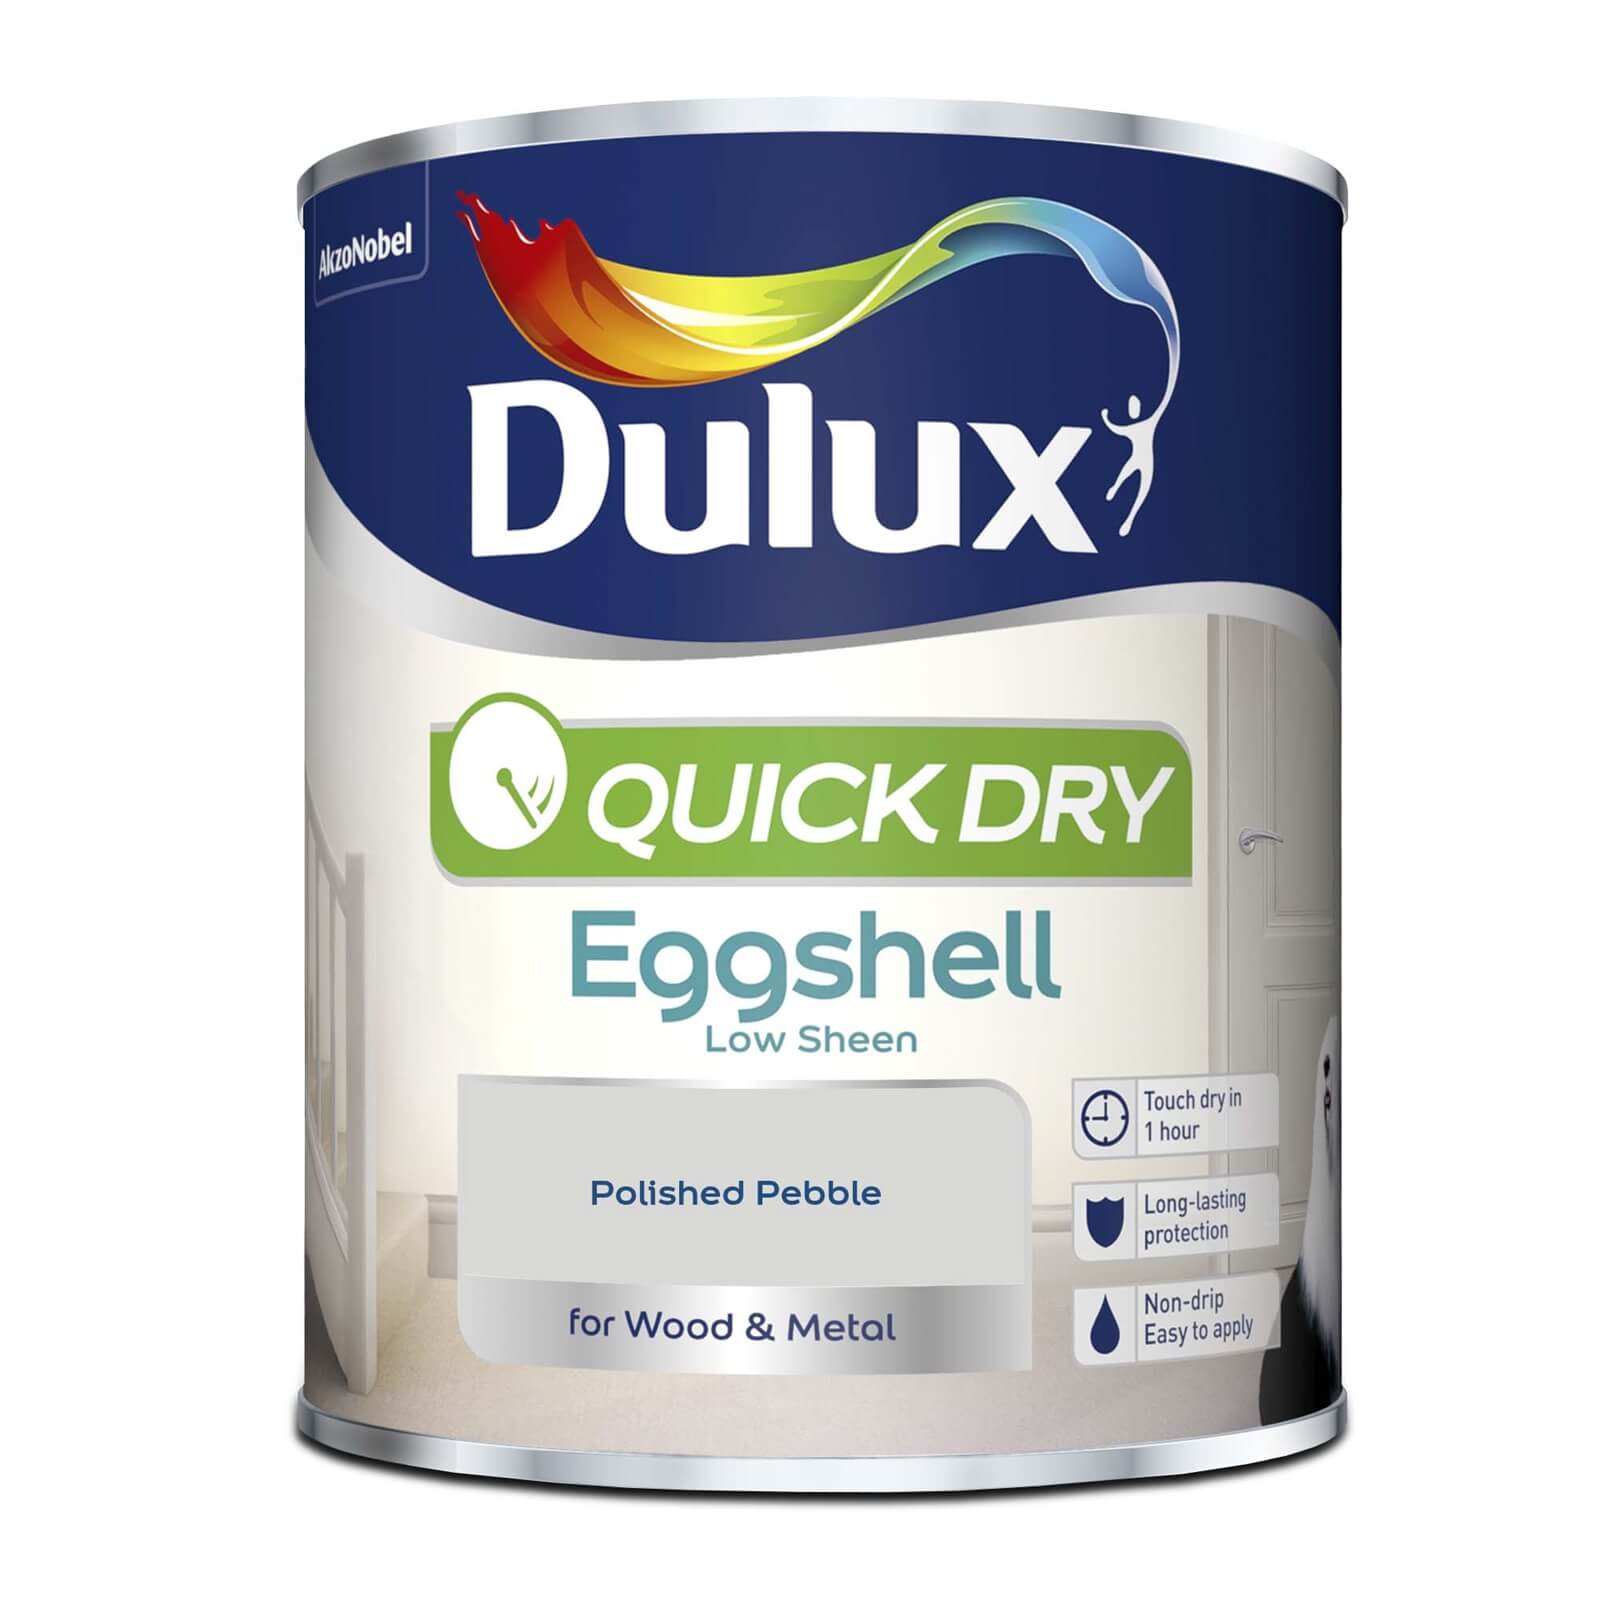 Dulux Quick Dry Eggshell Paint Polished Pebble - 750ml